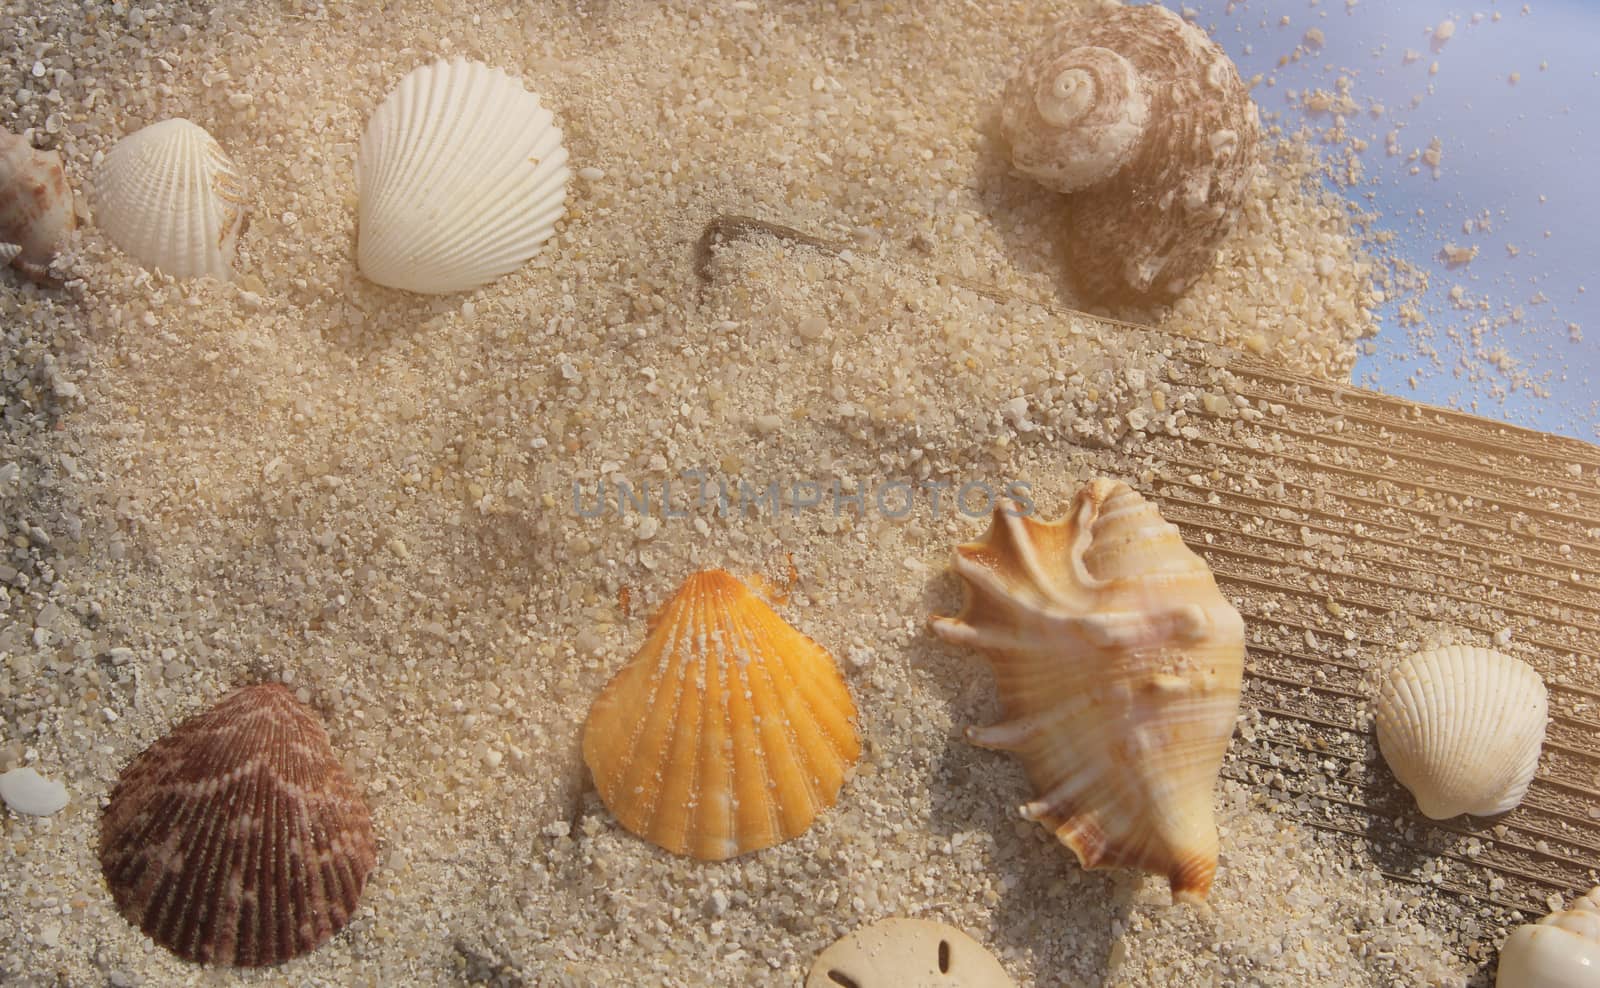 Seashells and sand on boardwalk in bright sun